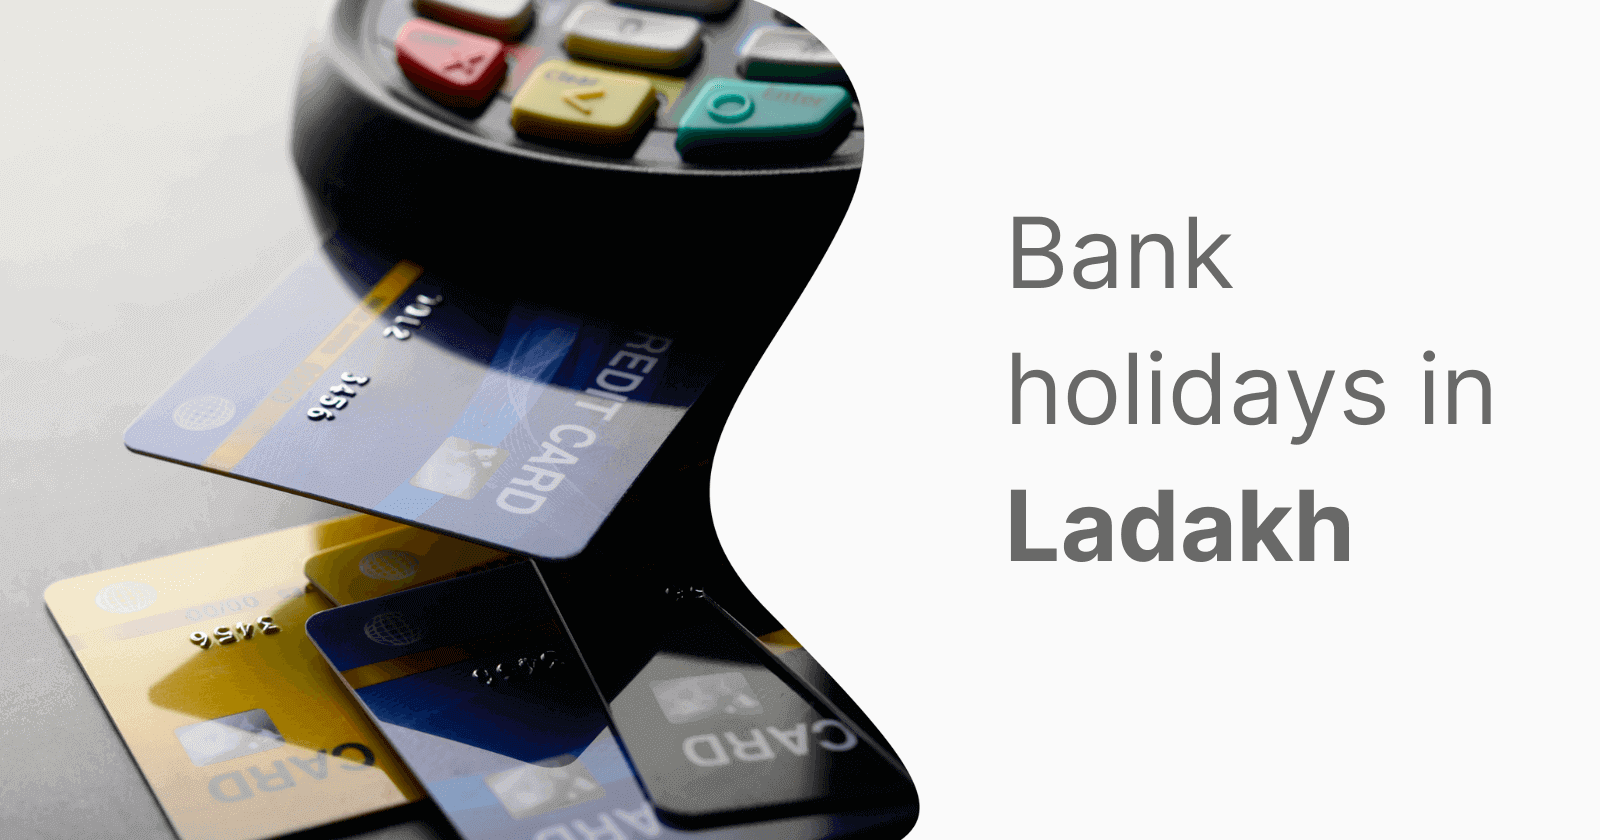 Ladakh Holidays: List of Bank Holidays in Ladakh in 2023